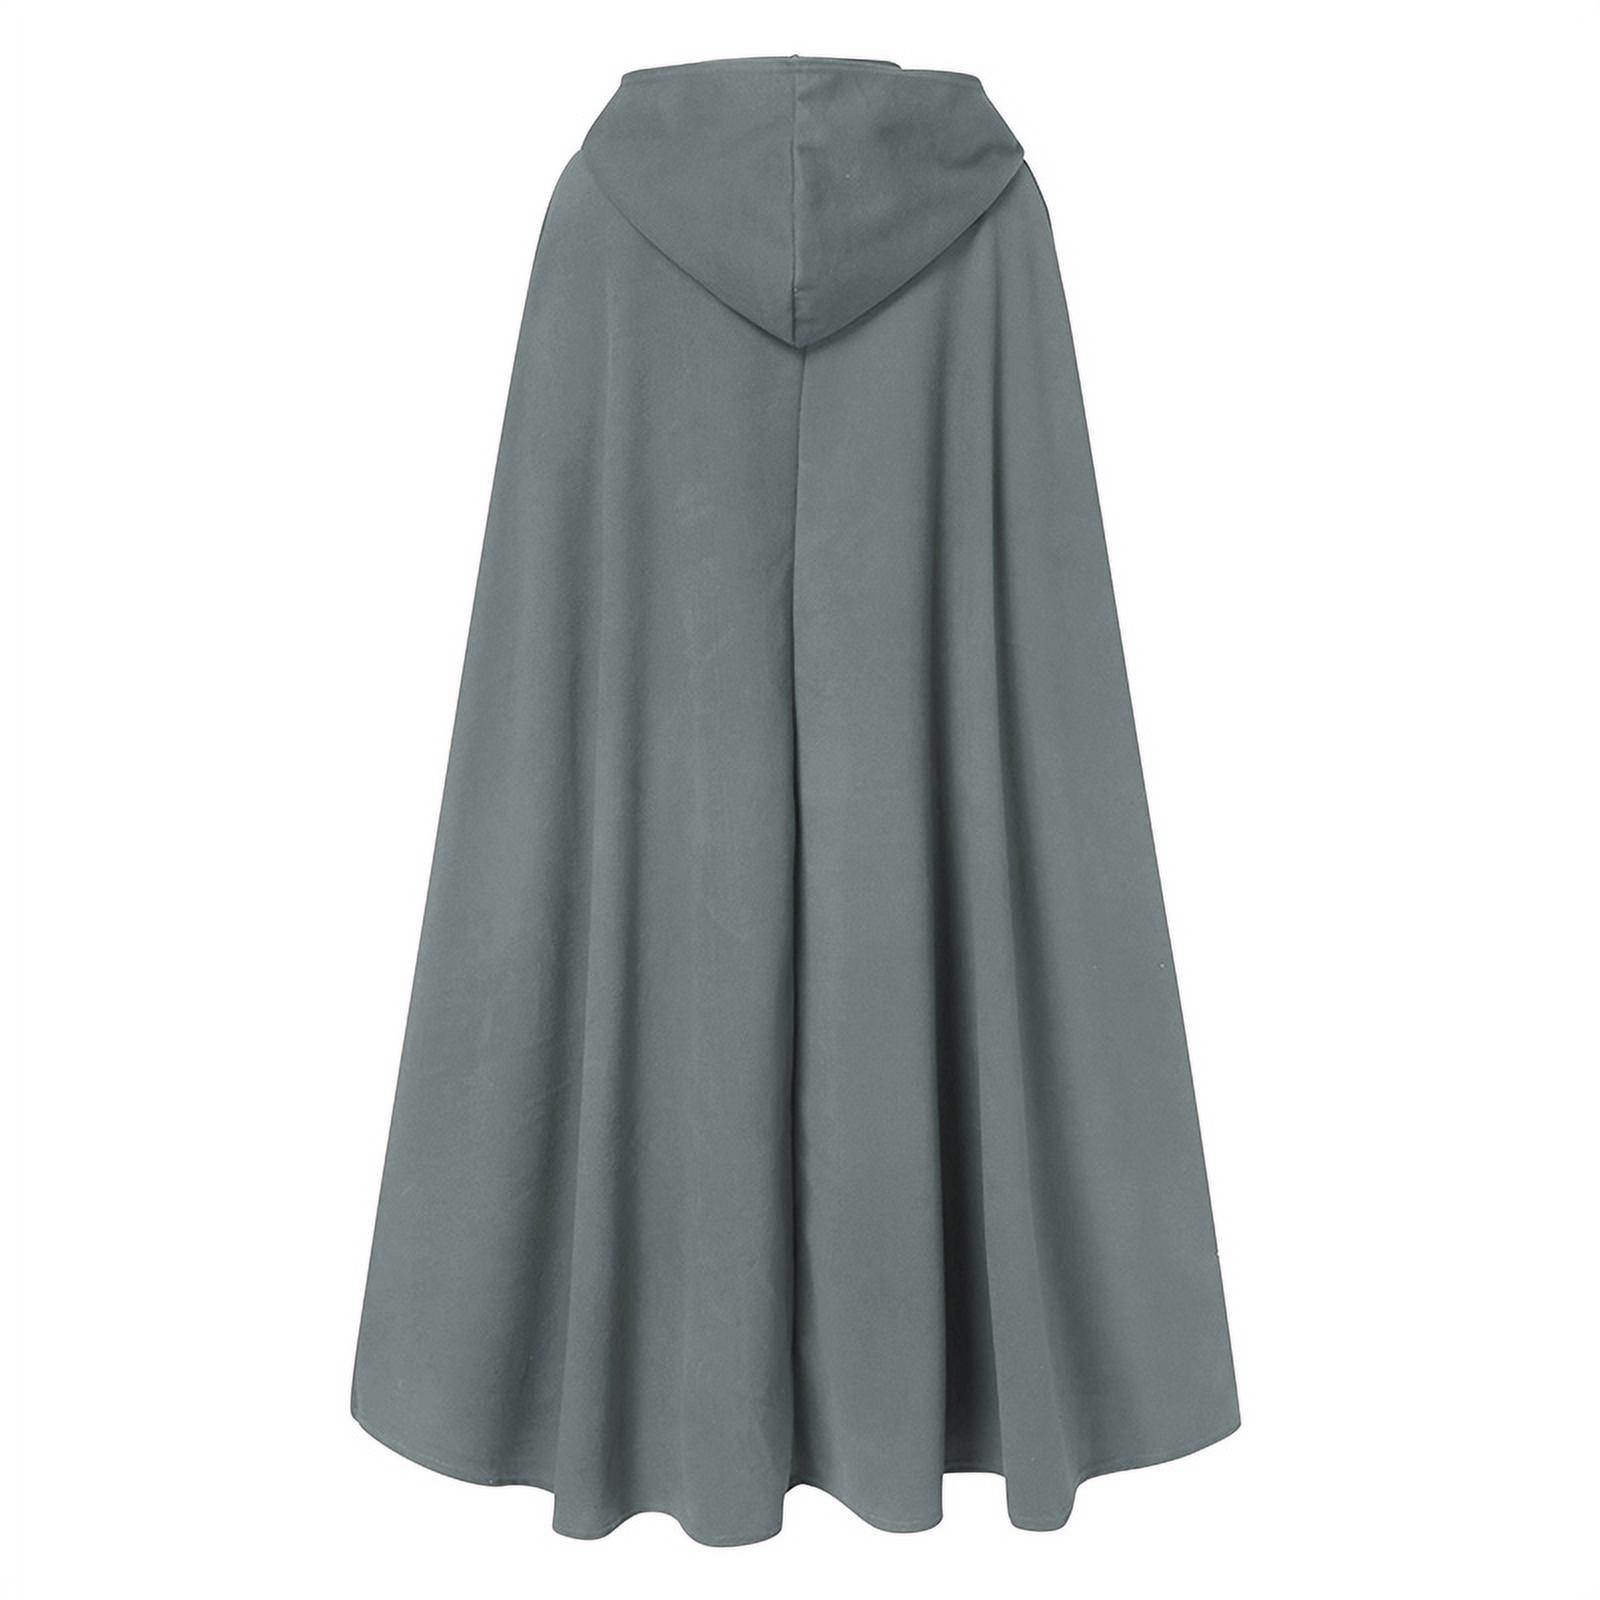 ZANZEA Women Full Sleeve Hoodies Cloak Cape Party Long Coat - image 4 of 4